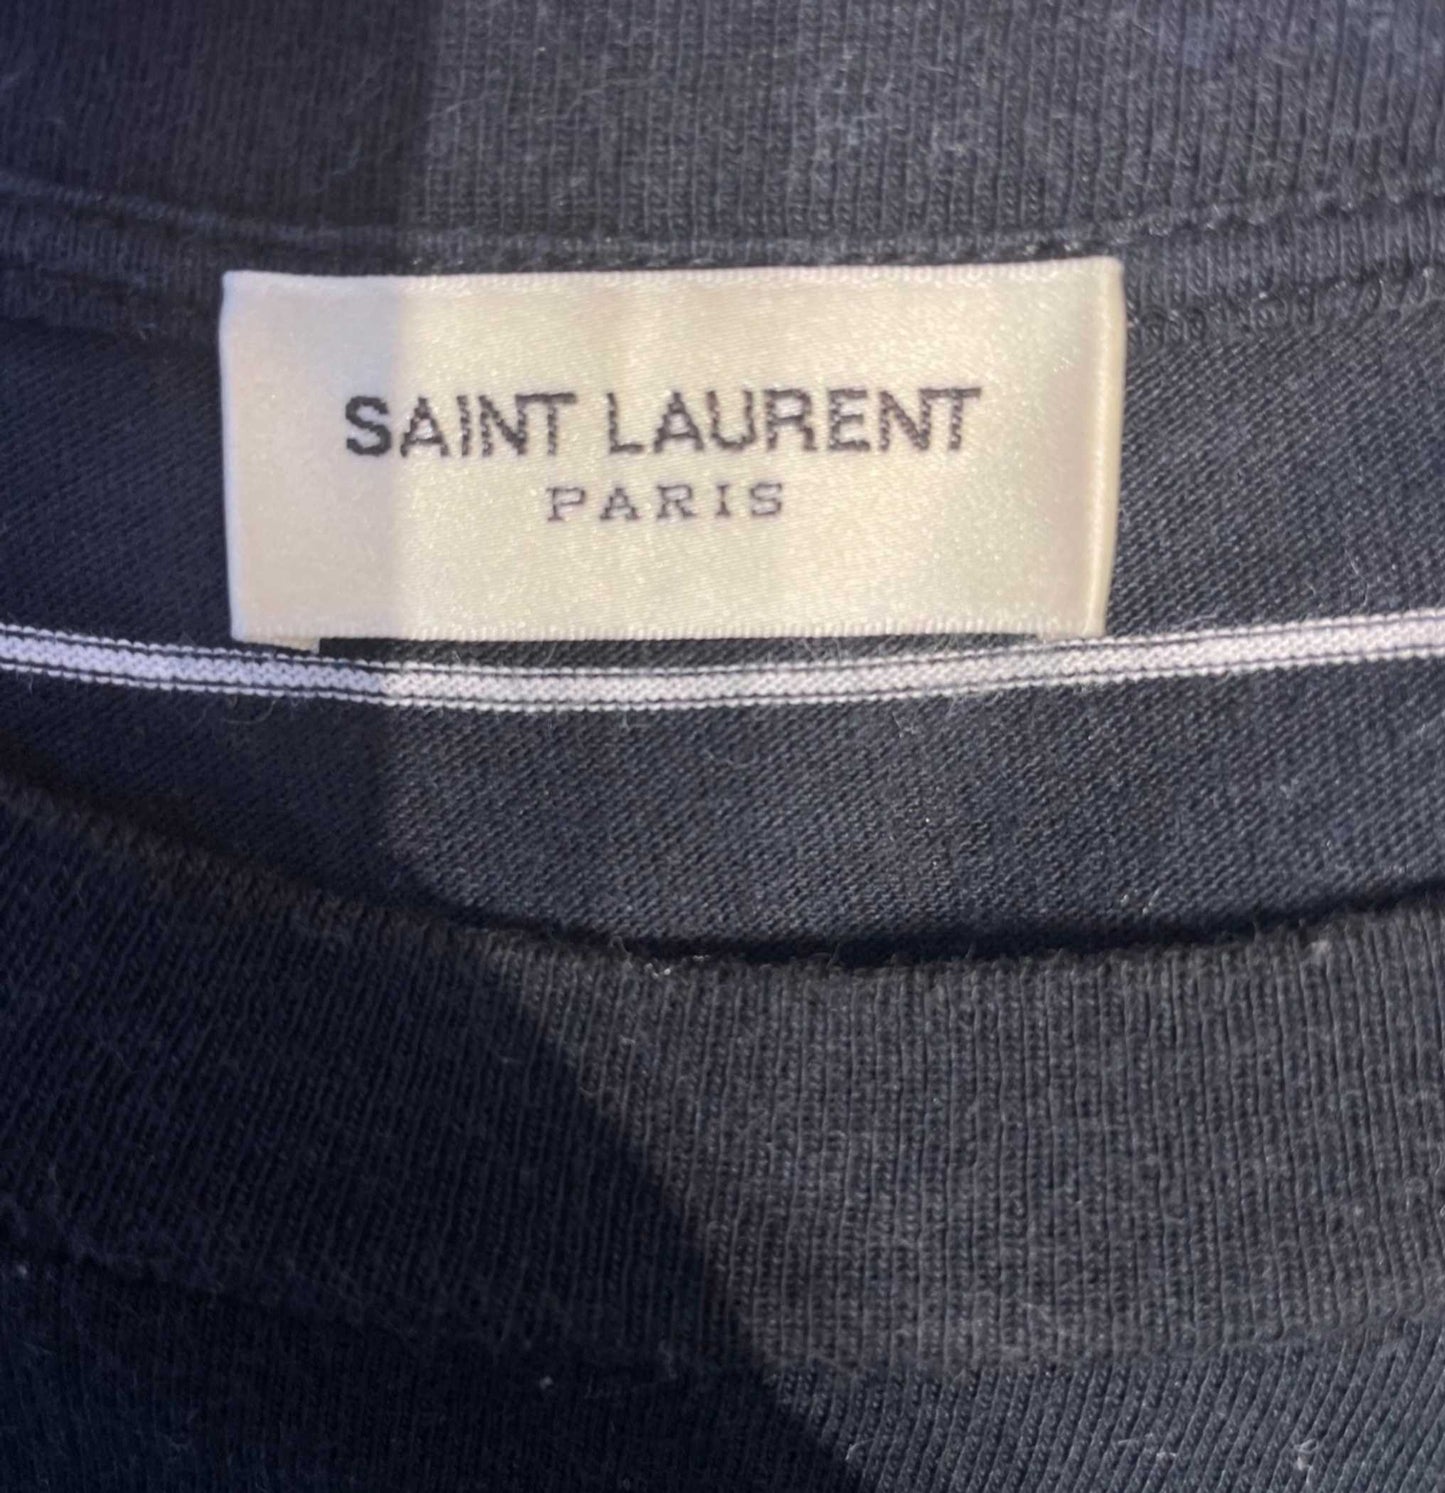 Saint Laurent Black and white striped short sleeve